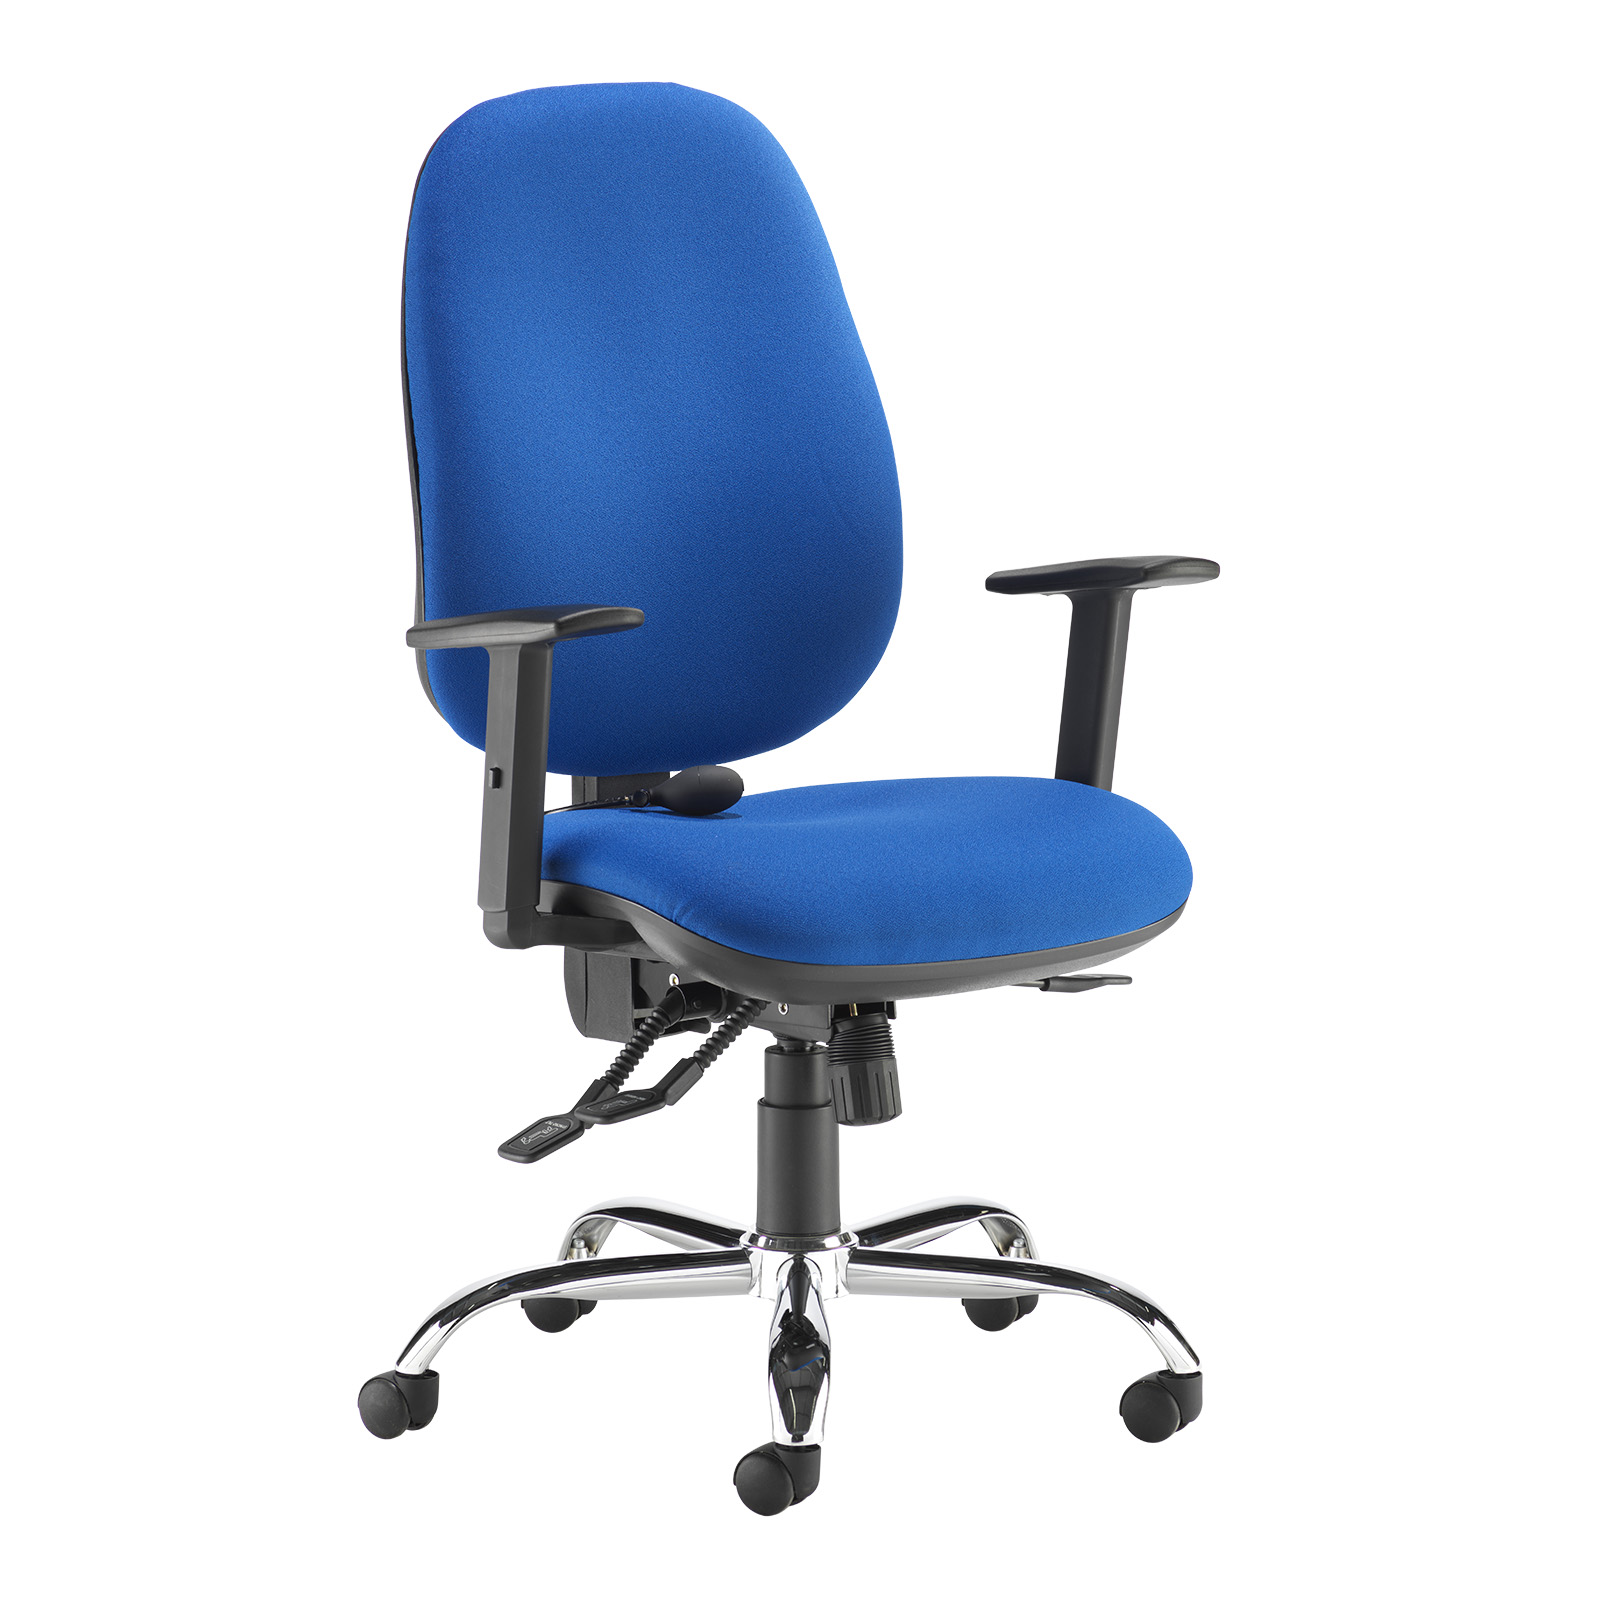 Desk Chairs Jota ergo 24hr ergonomic asynchro task chair - blue